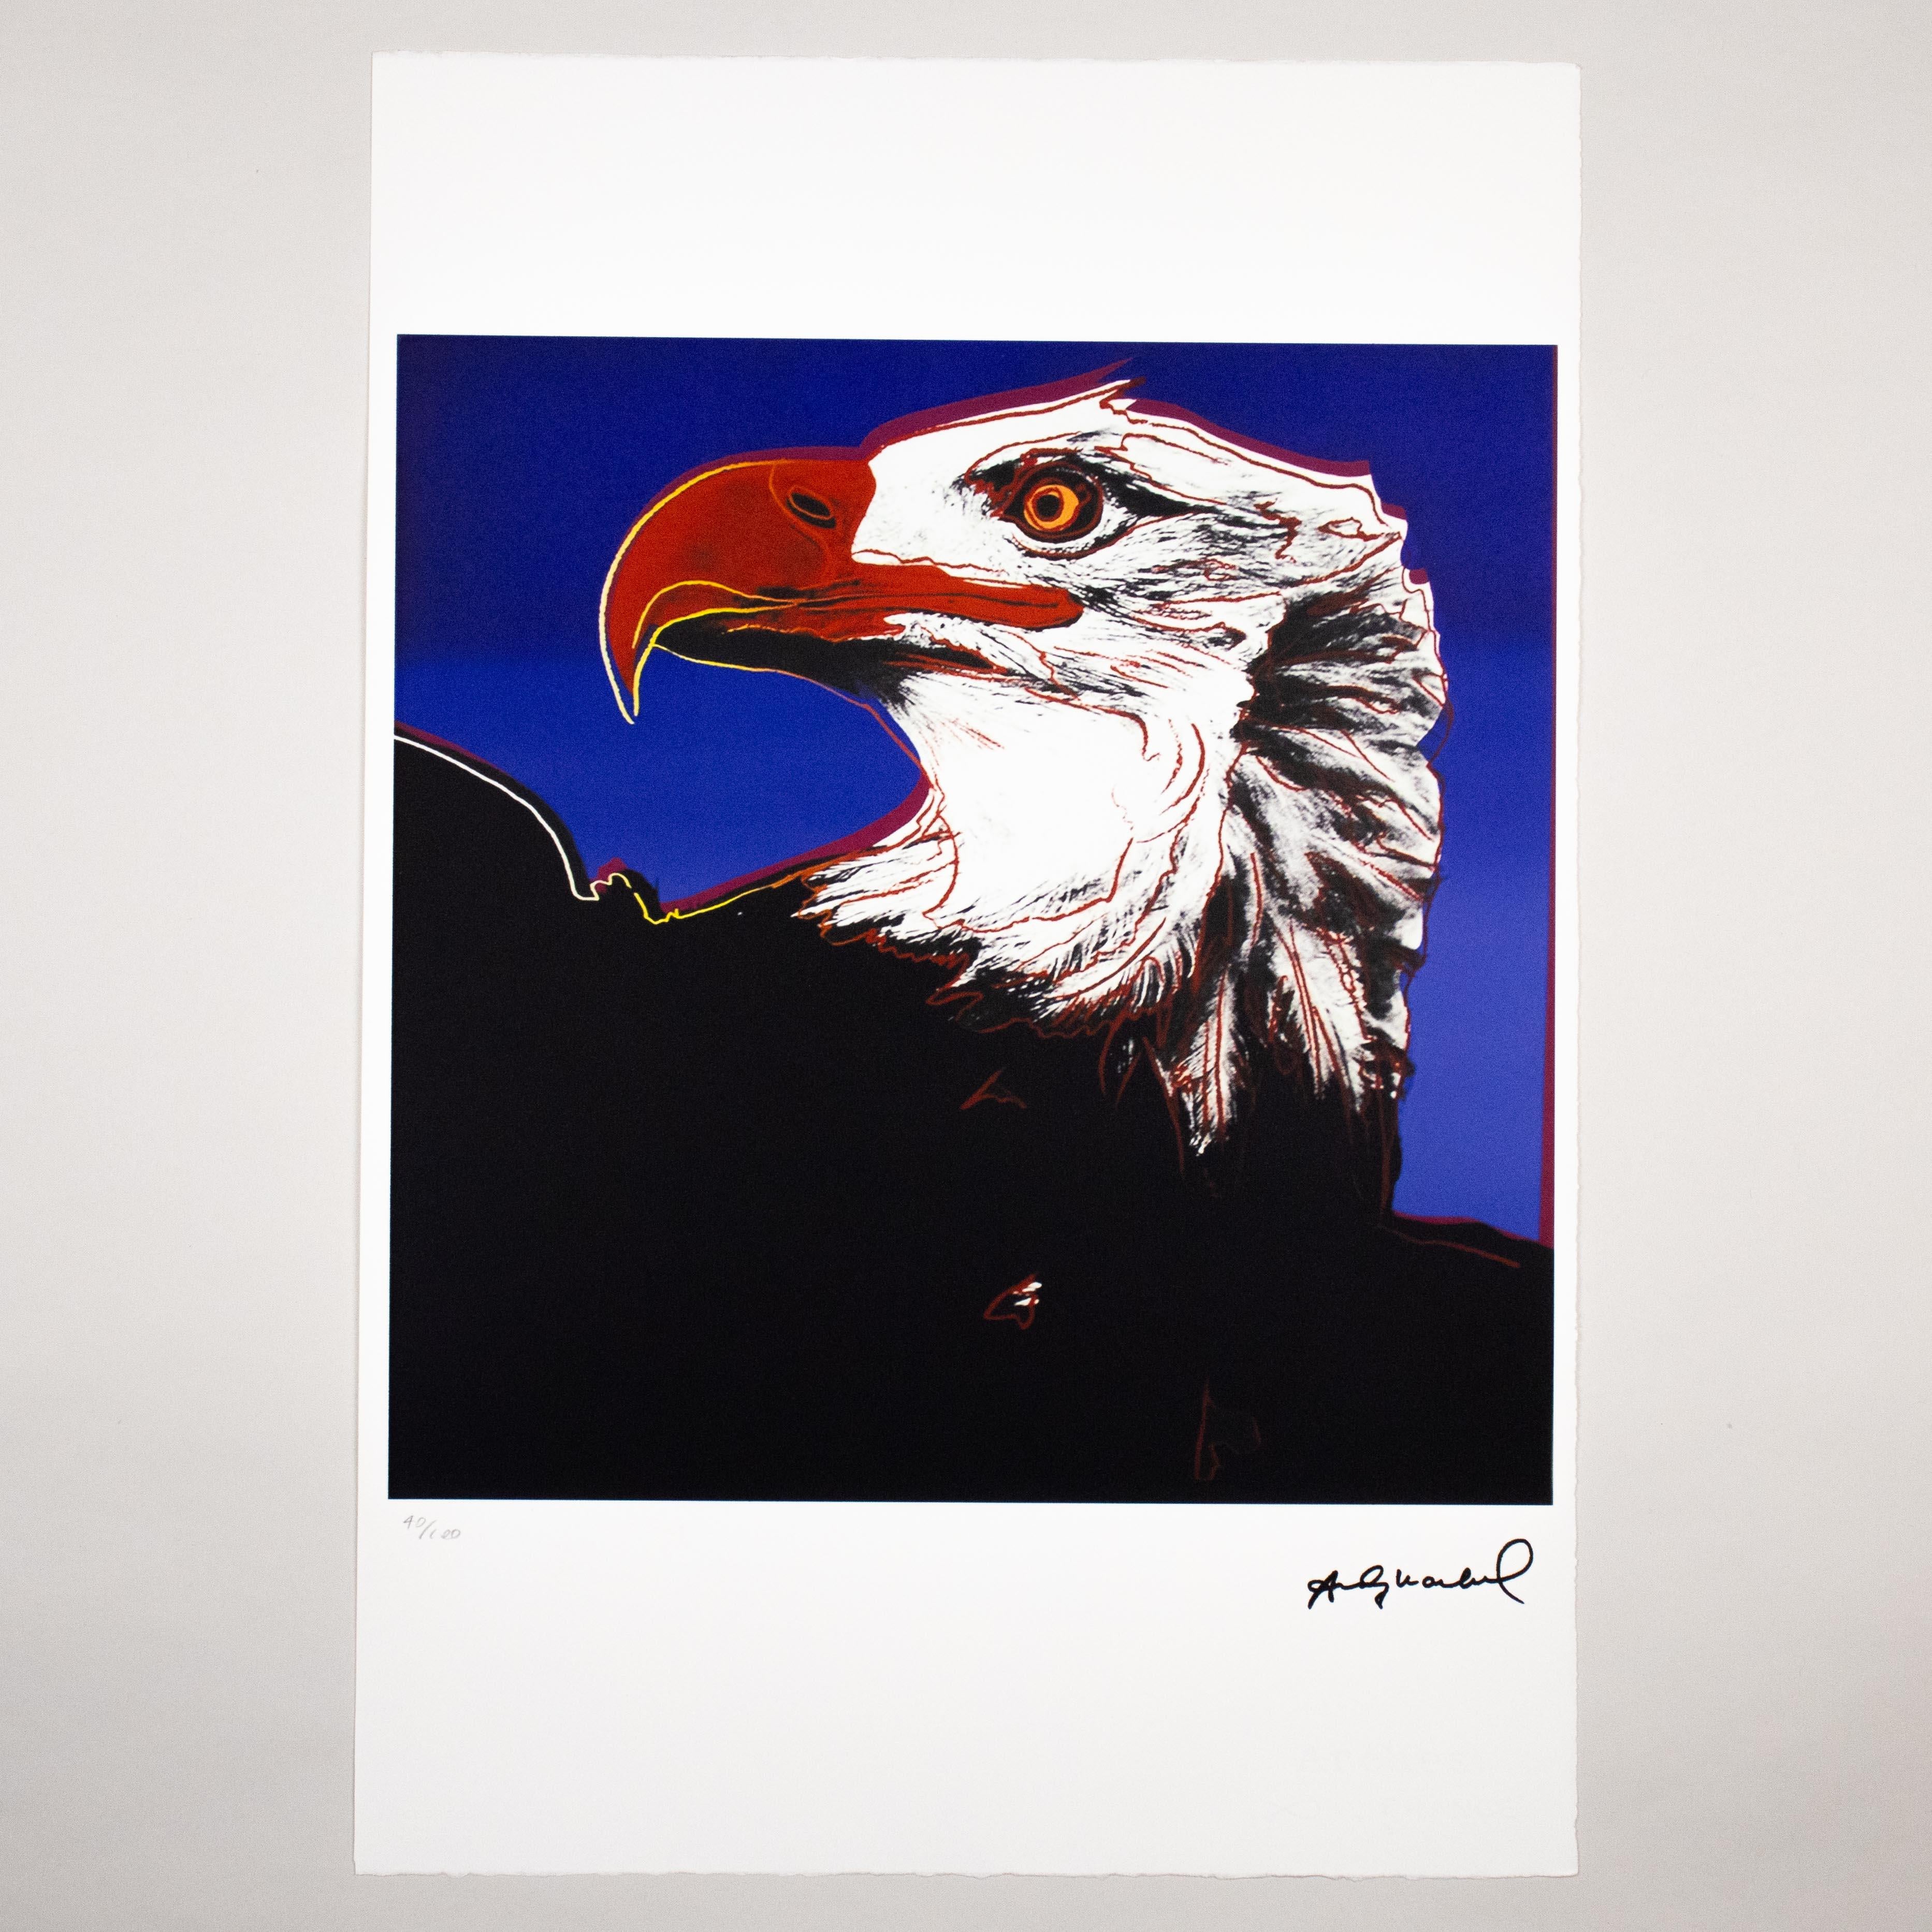 Bald Eagle - 1983 - Original Lithograph - Limited Edition Print - 40/100 pcs. - Black Portrait Print by Andy Warhol